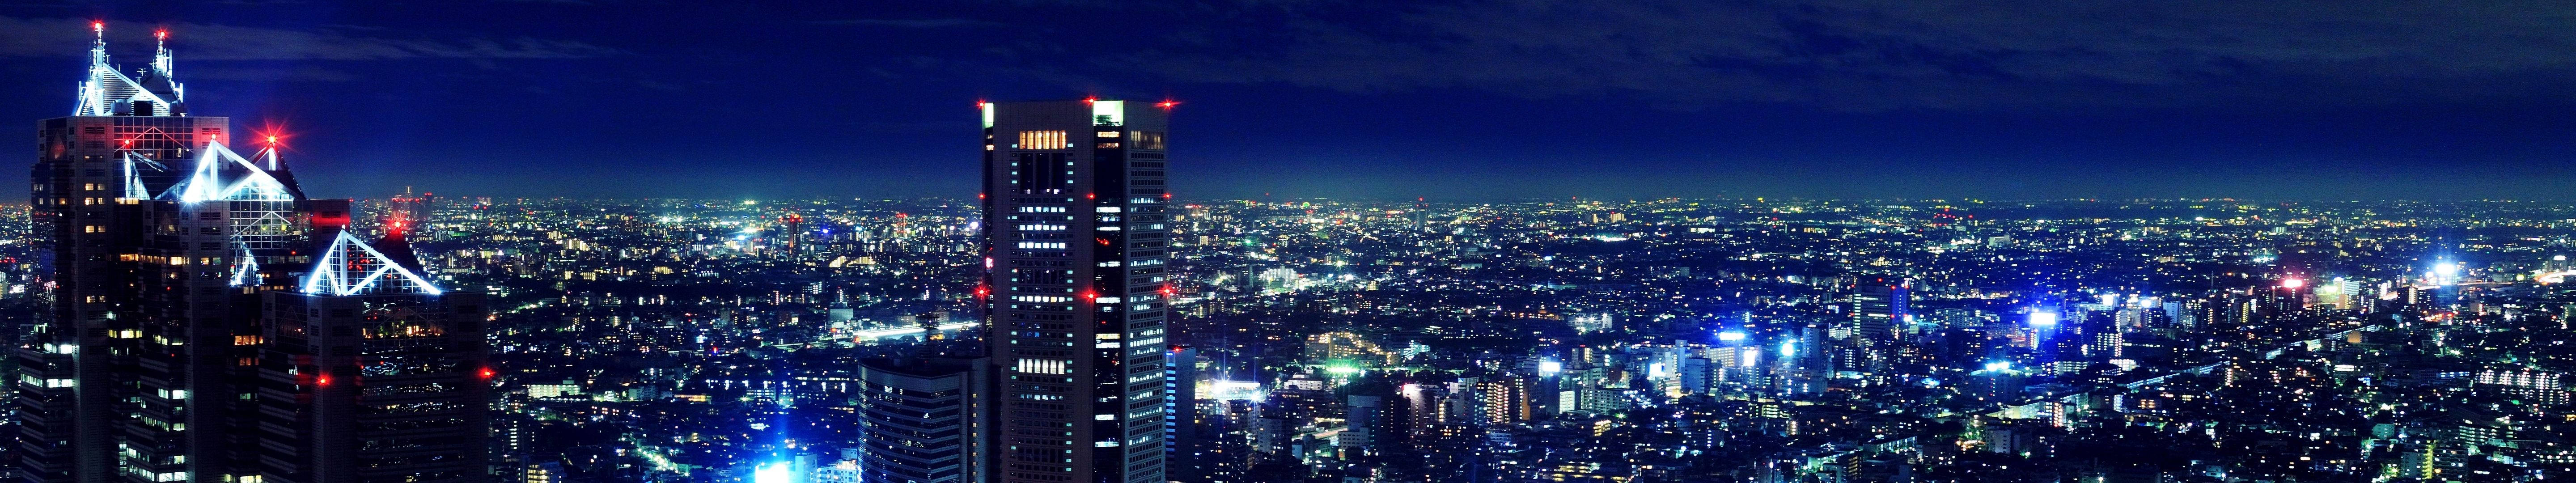 3 Monitor Tokyo Night City Wallpaper